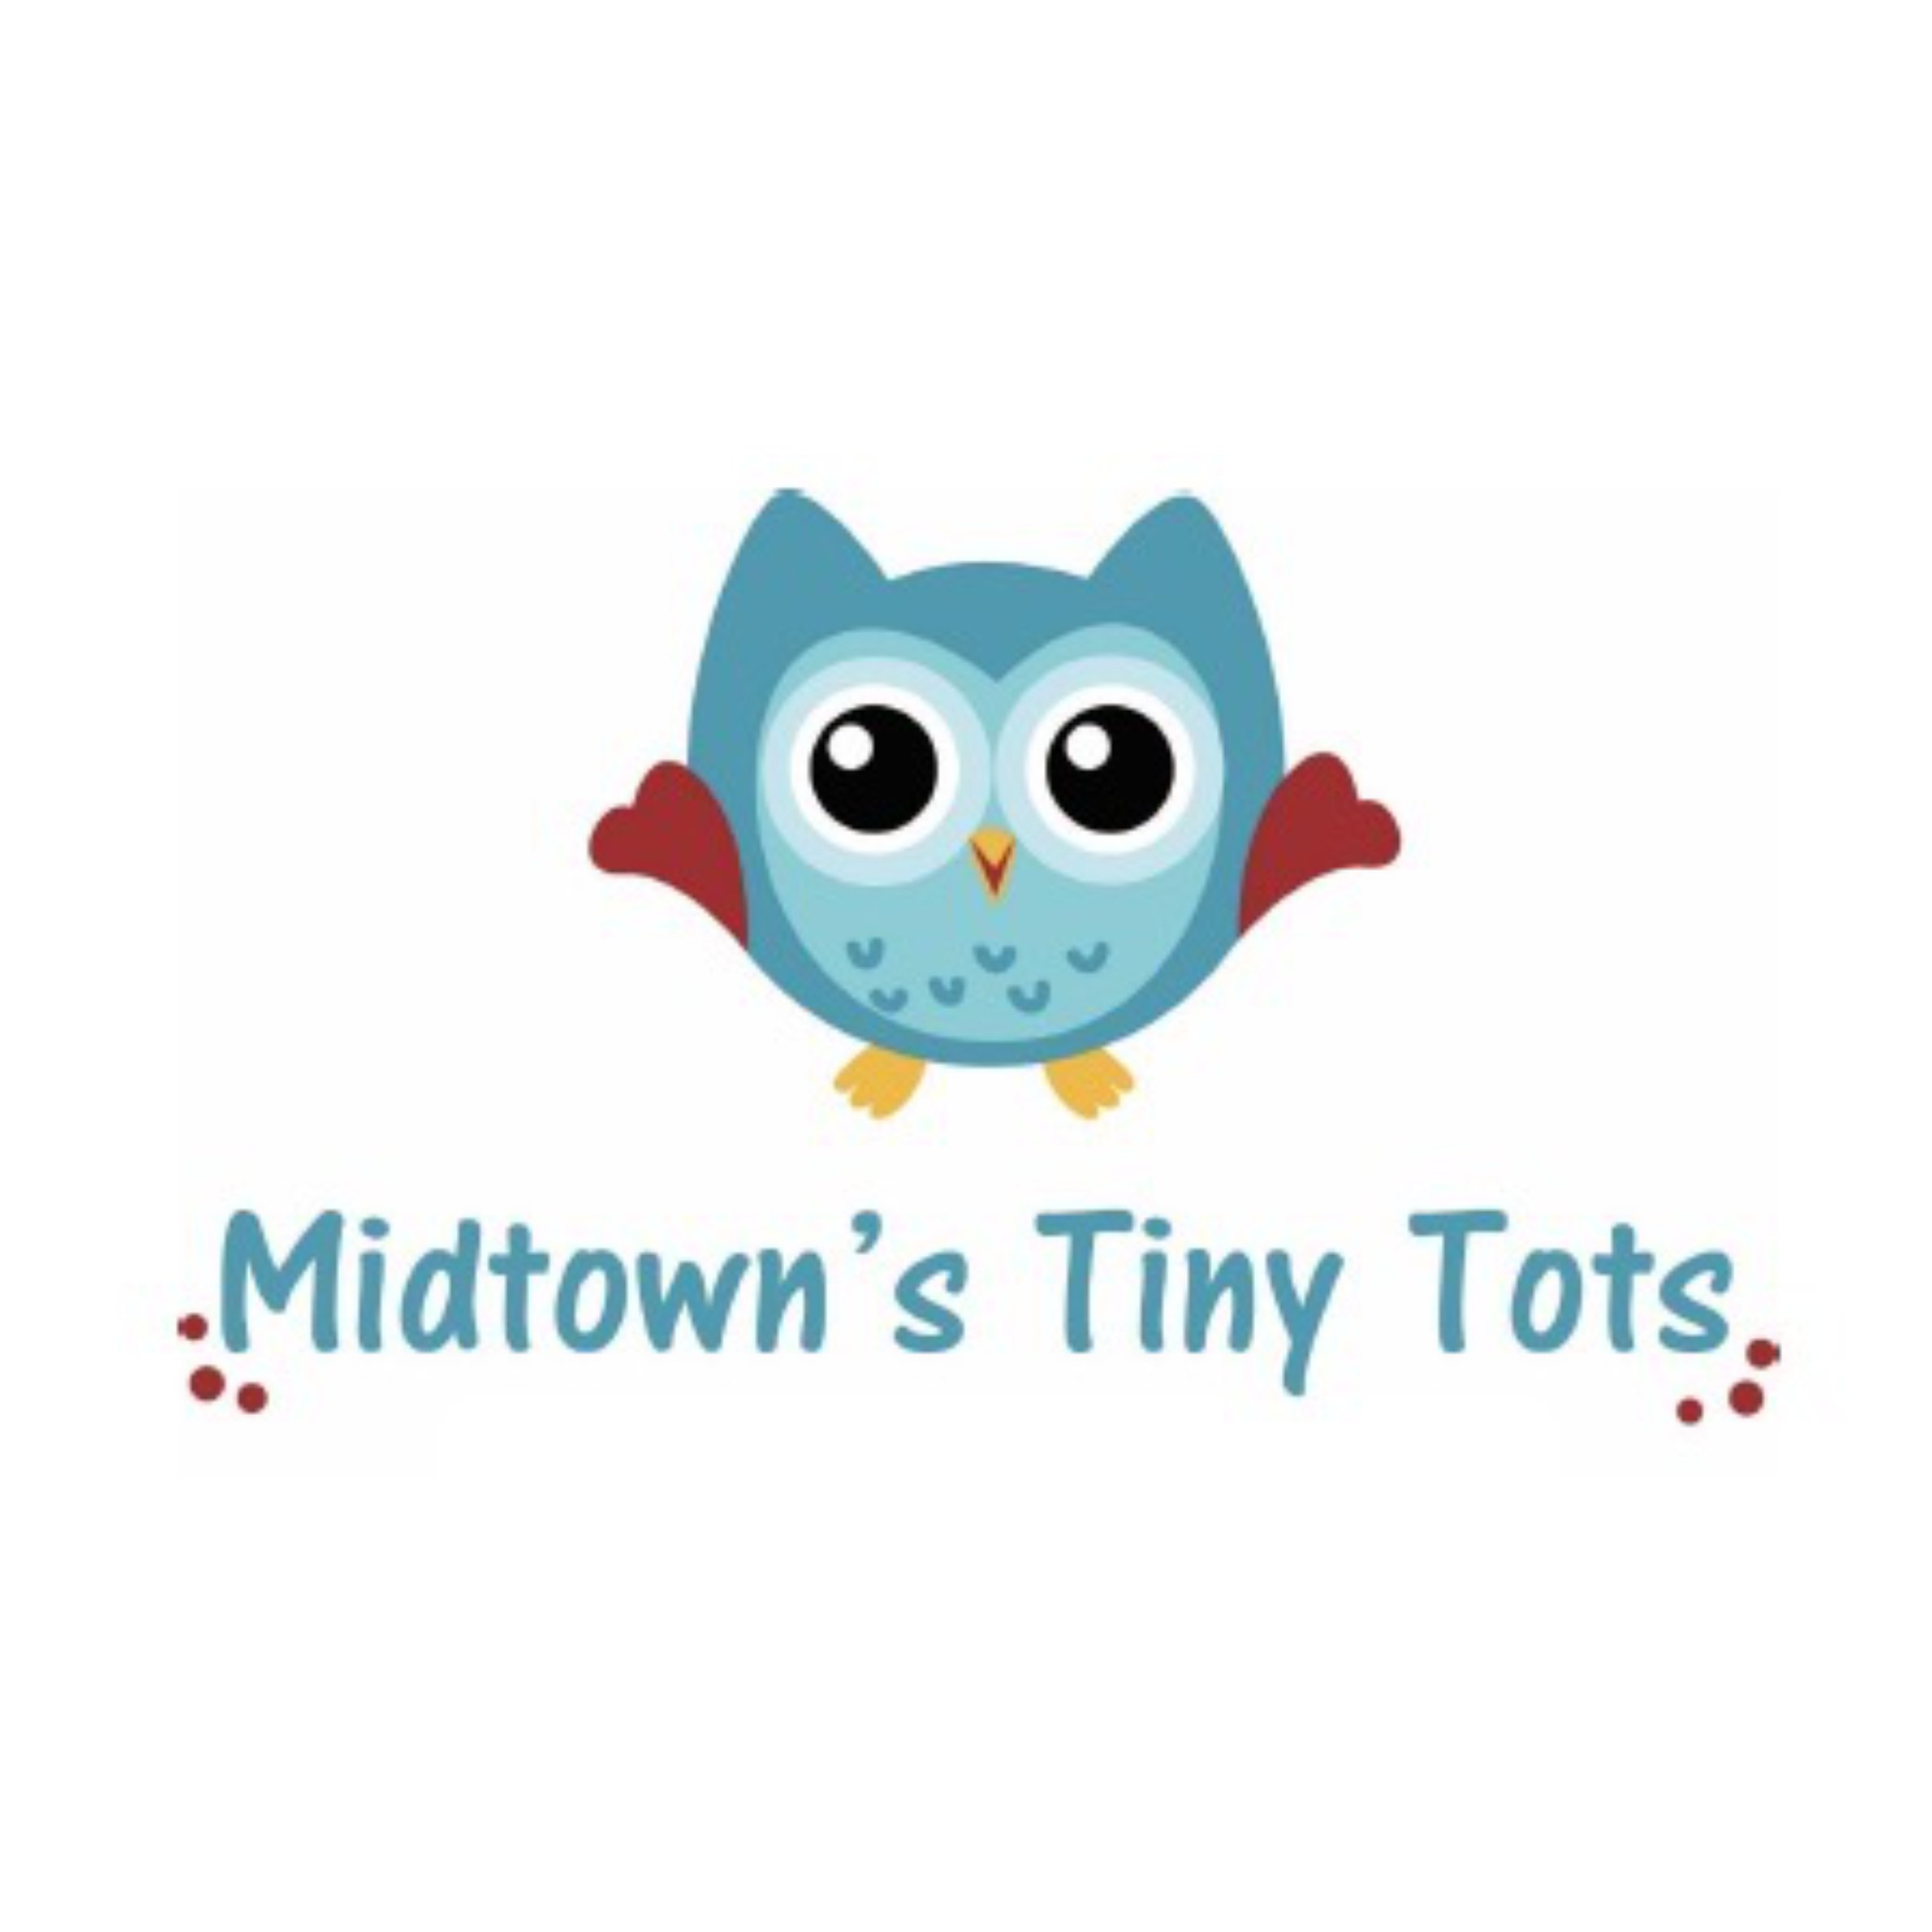 Midotnw's Tiny Tots